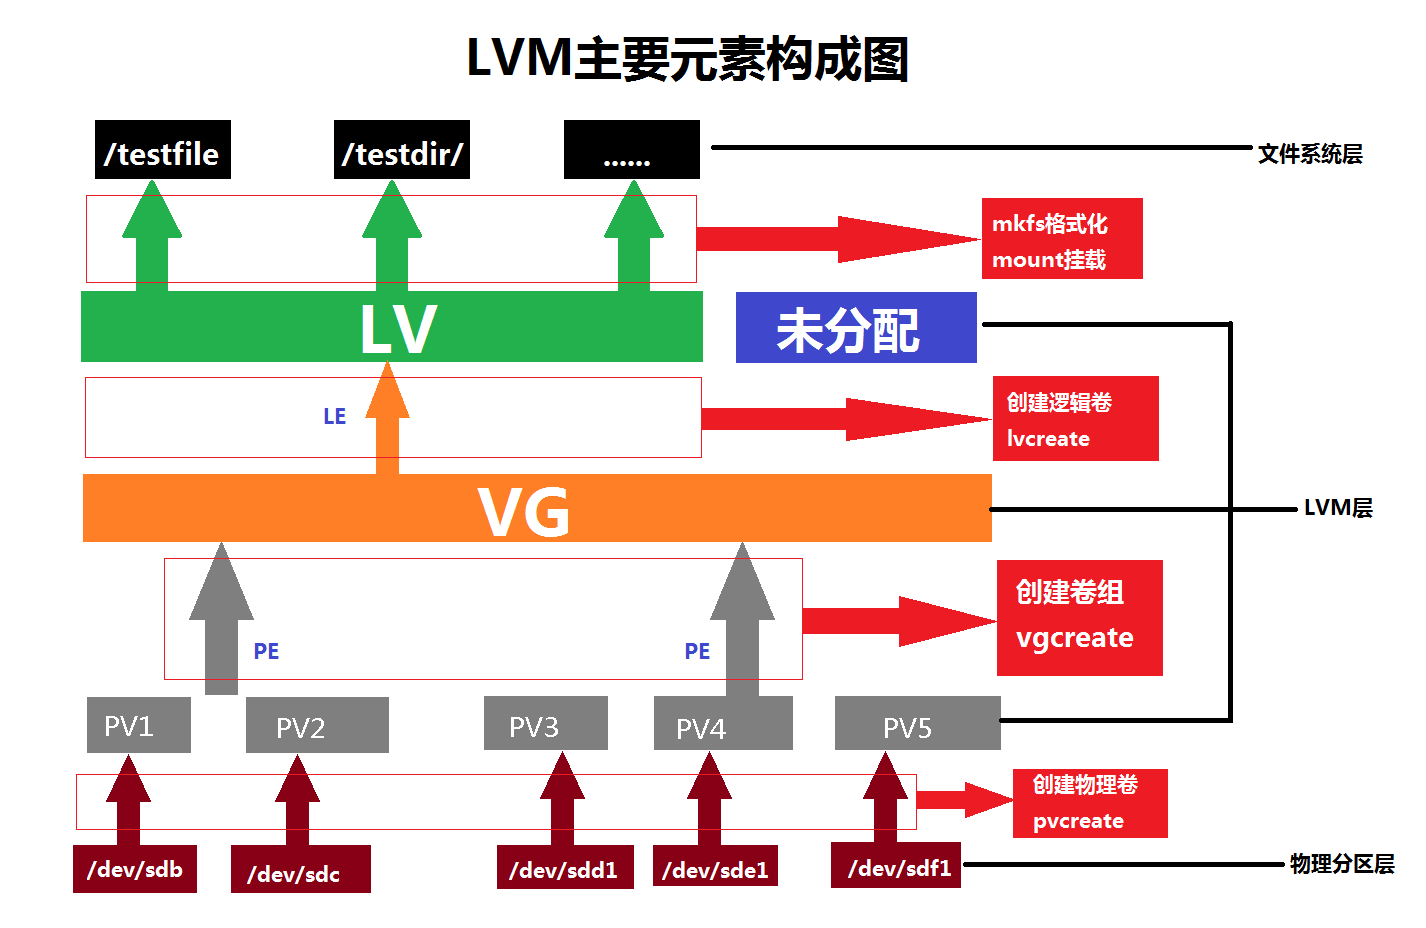 lvm-arch12